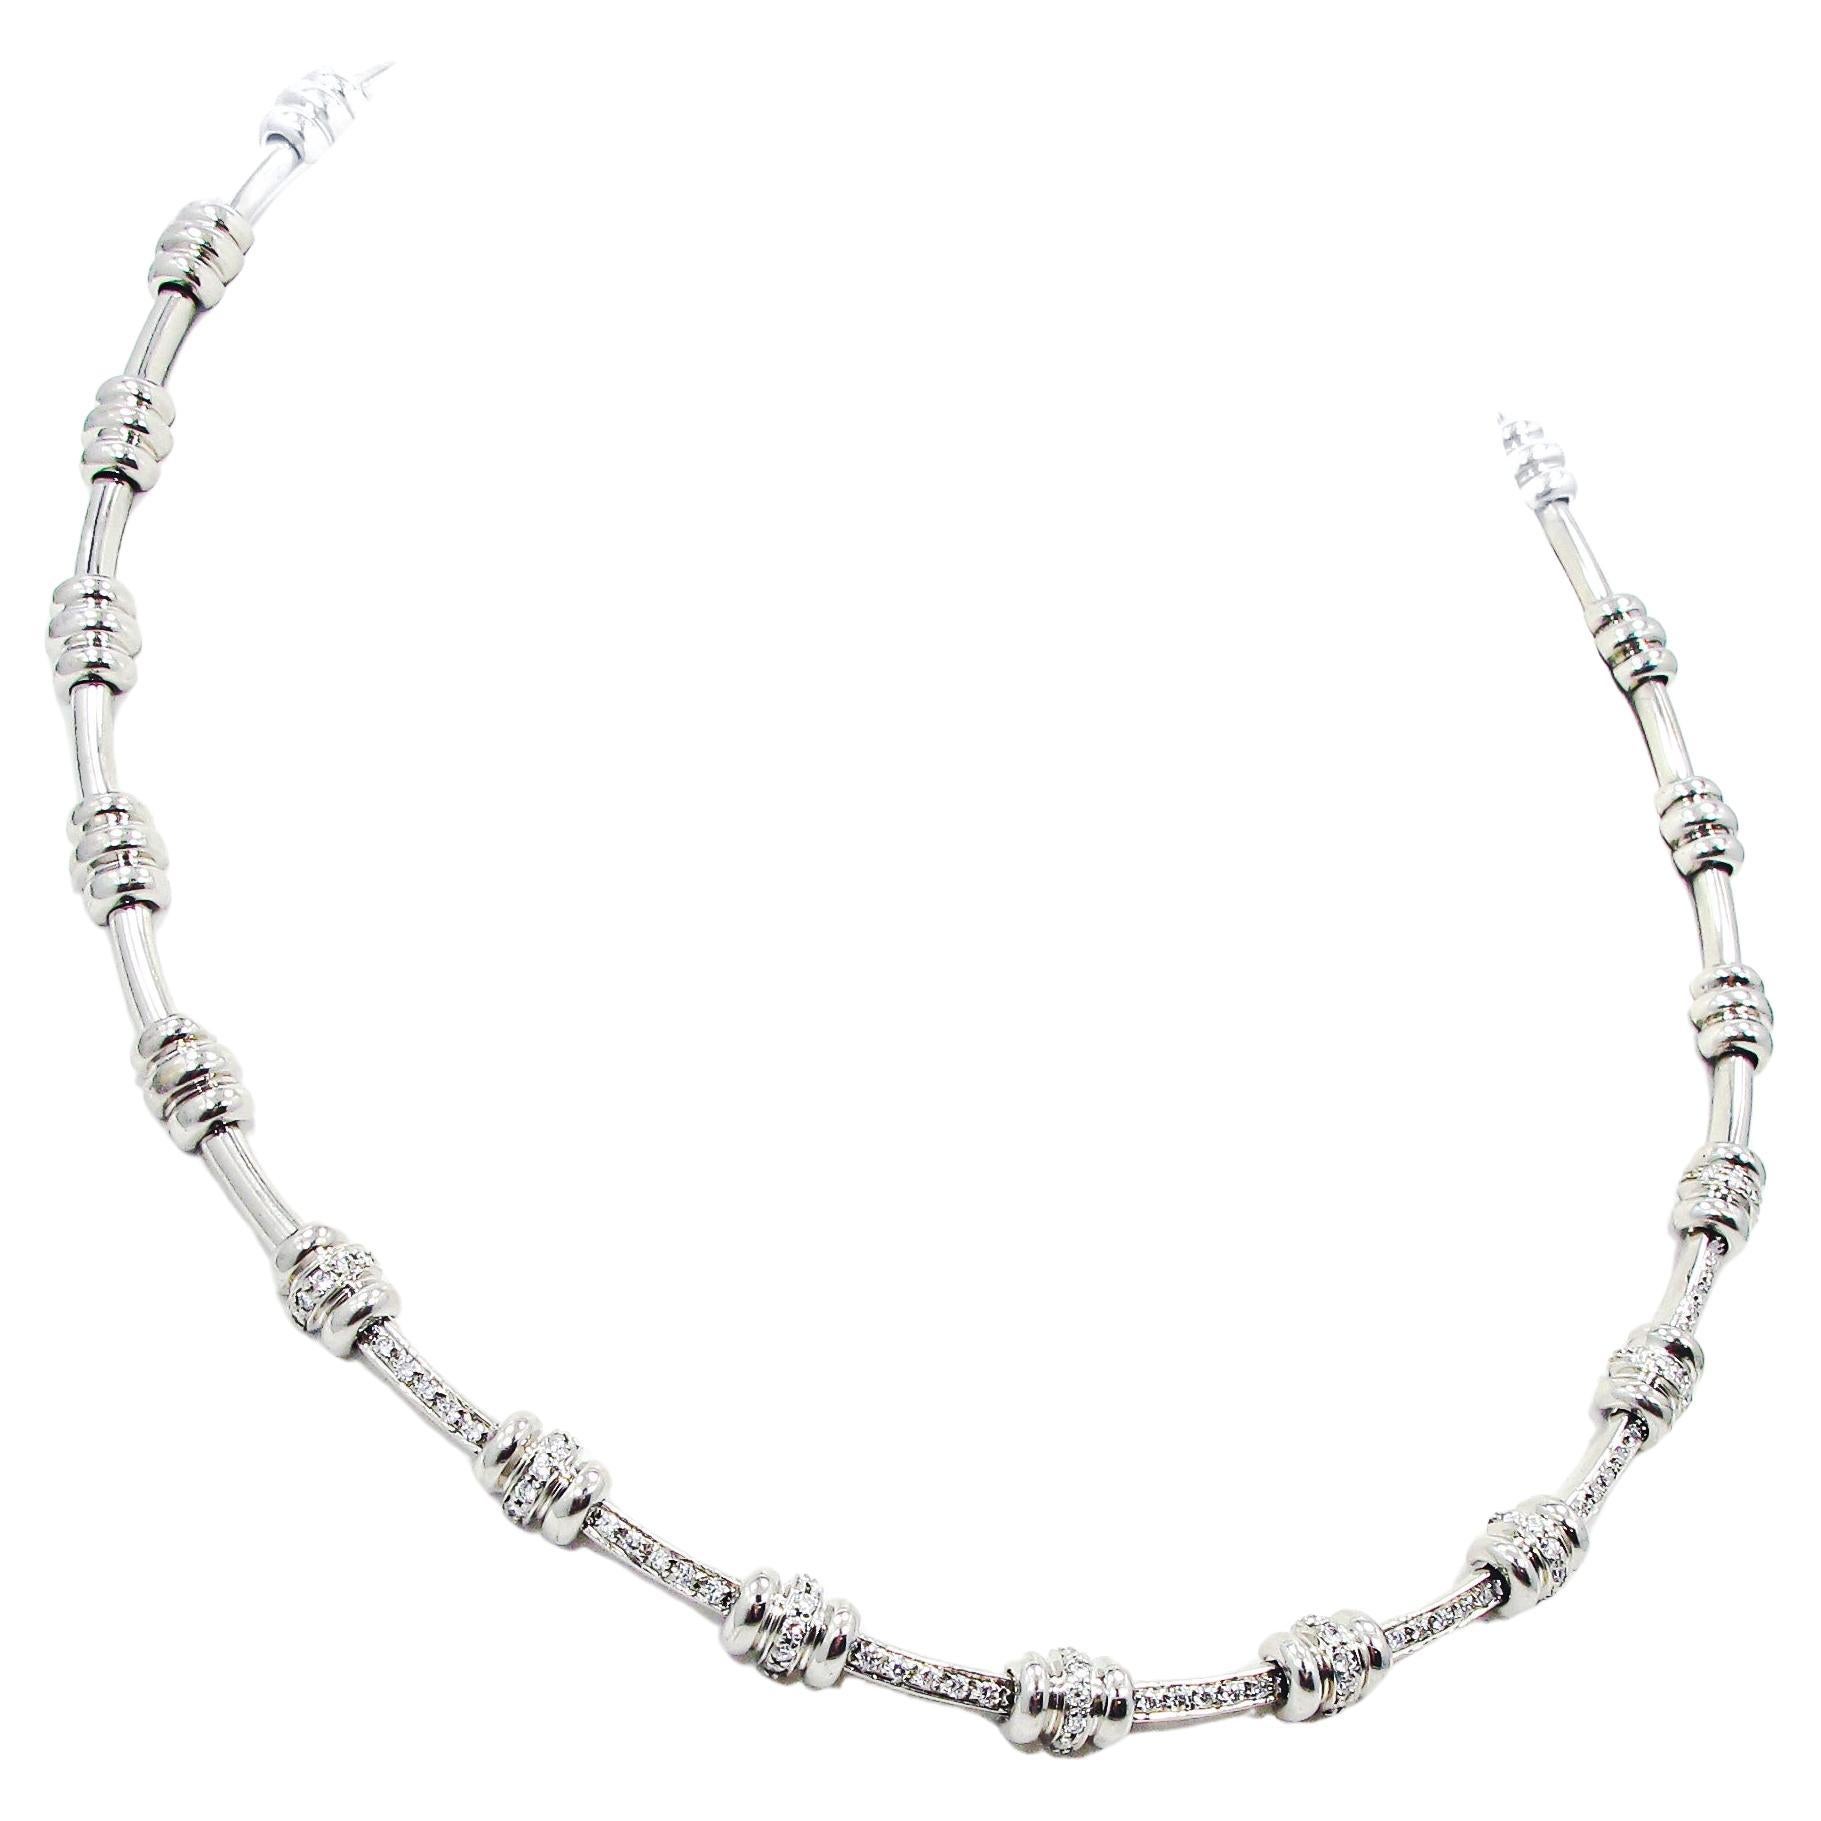 Contemporary Segmented Diamond and Gold Fashion Necklace